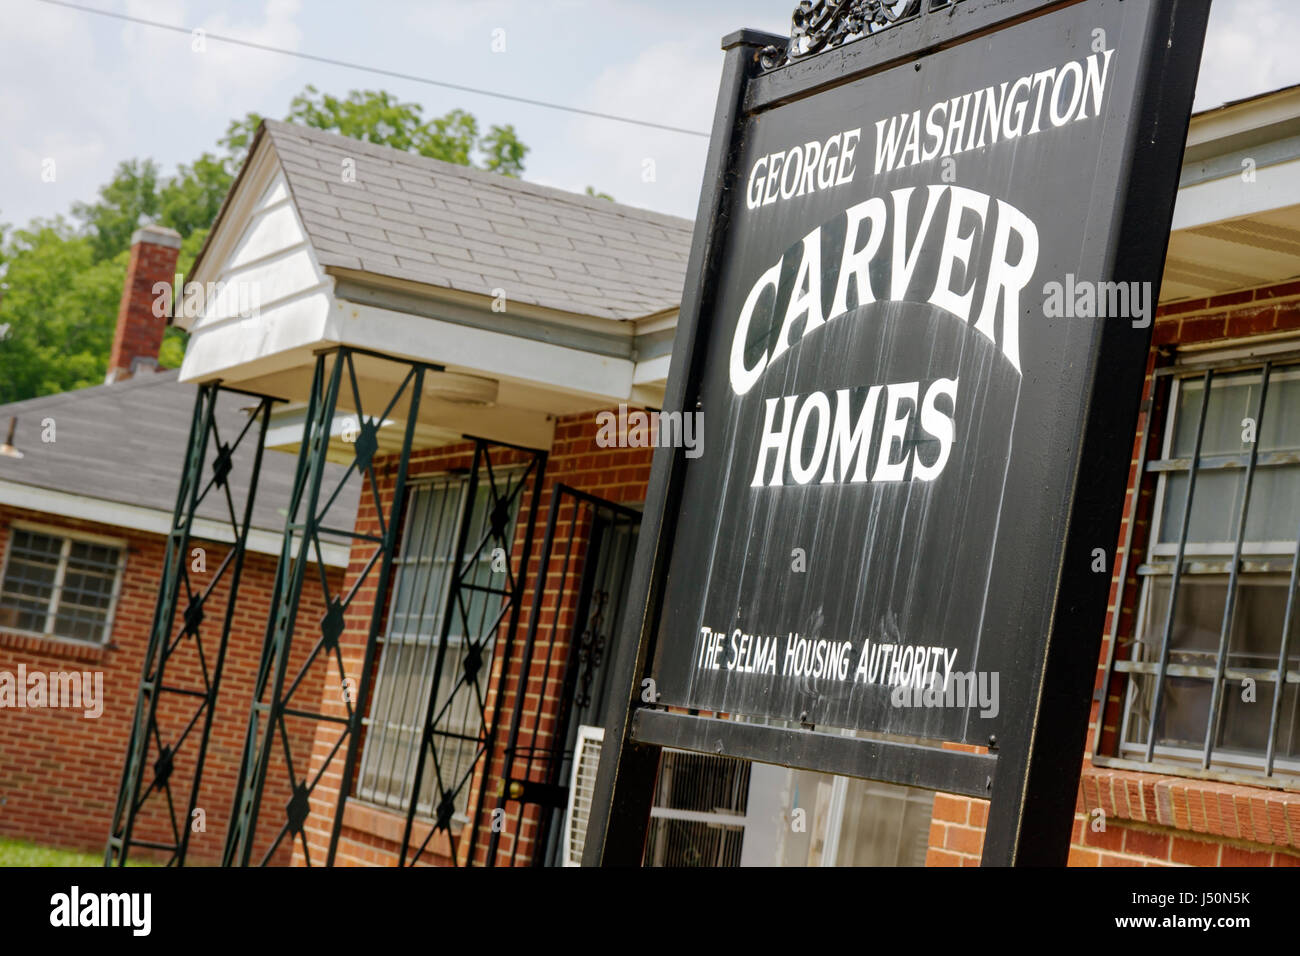 Alabama,Dallas County,Selma,Martin Luther King Jr. Street,George Washington Carver Homes,public housing,sign,AL080522035 Stock Photo